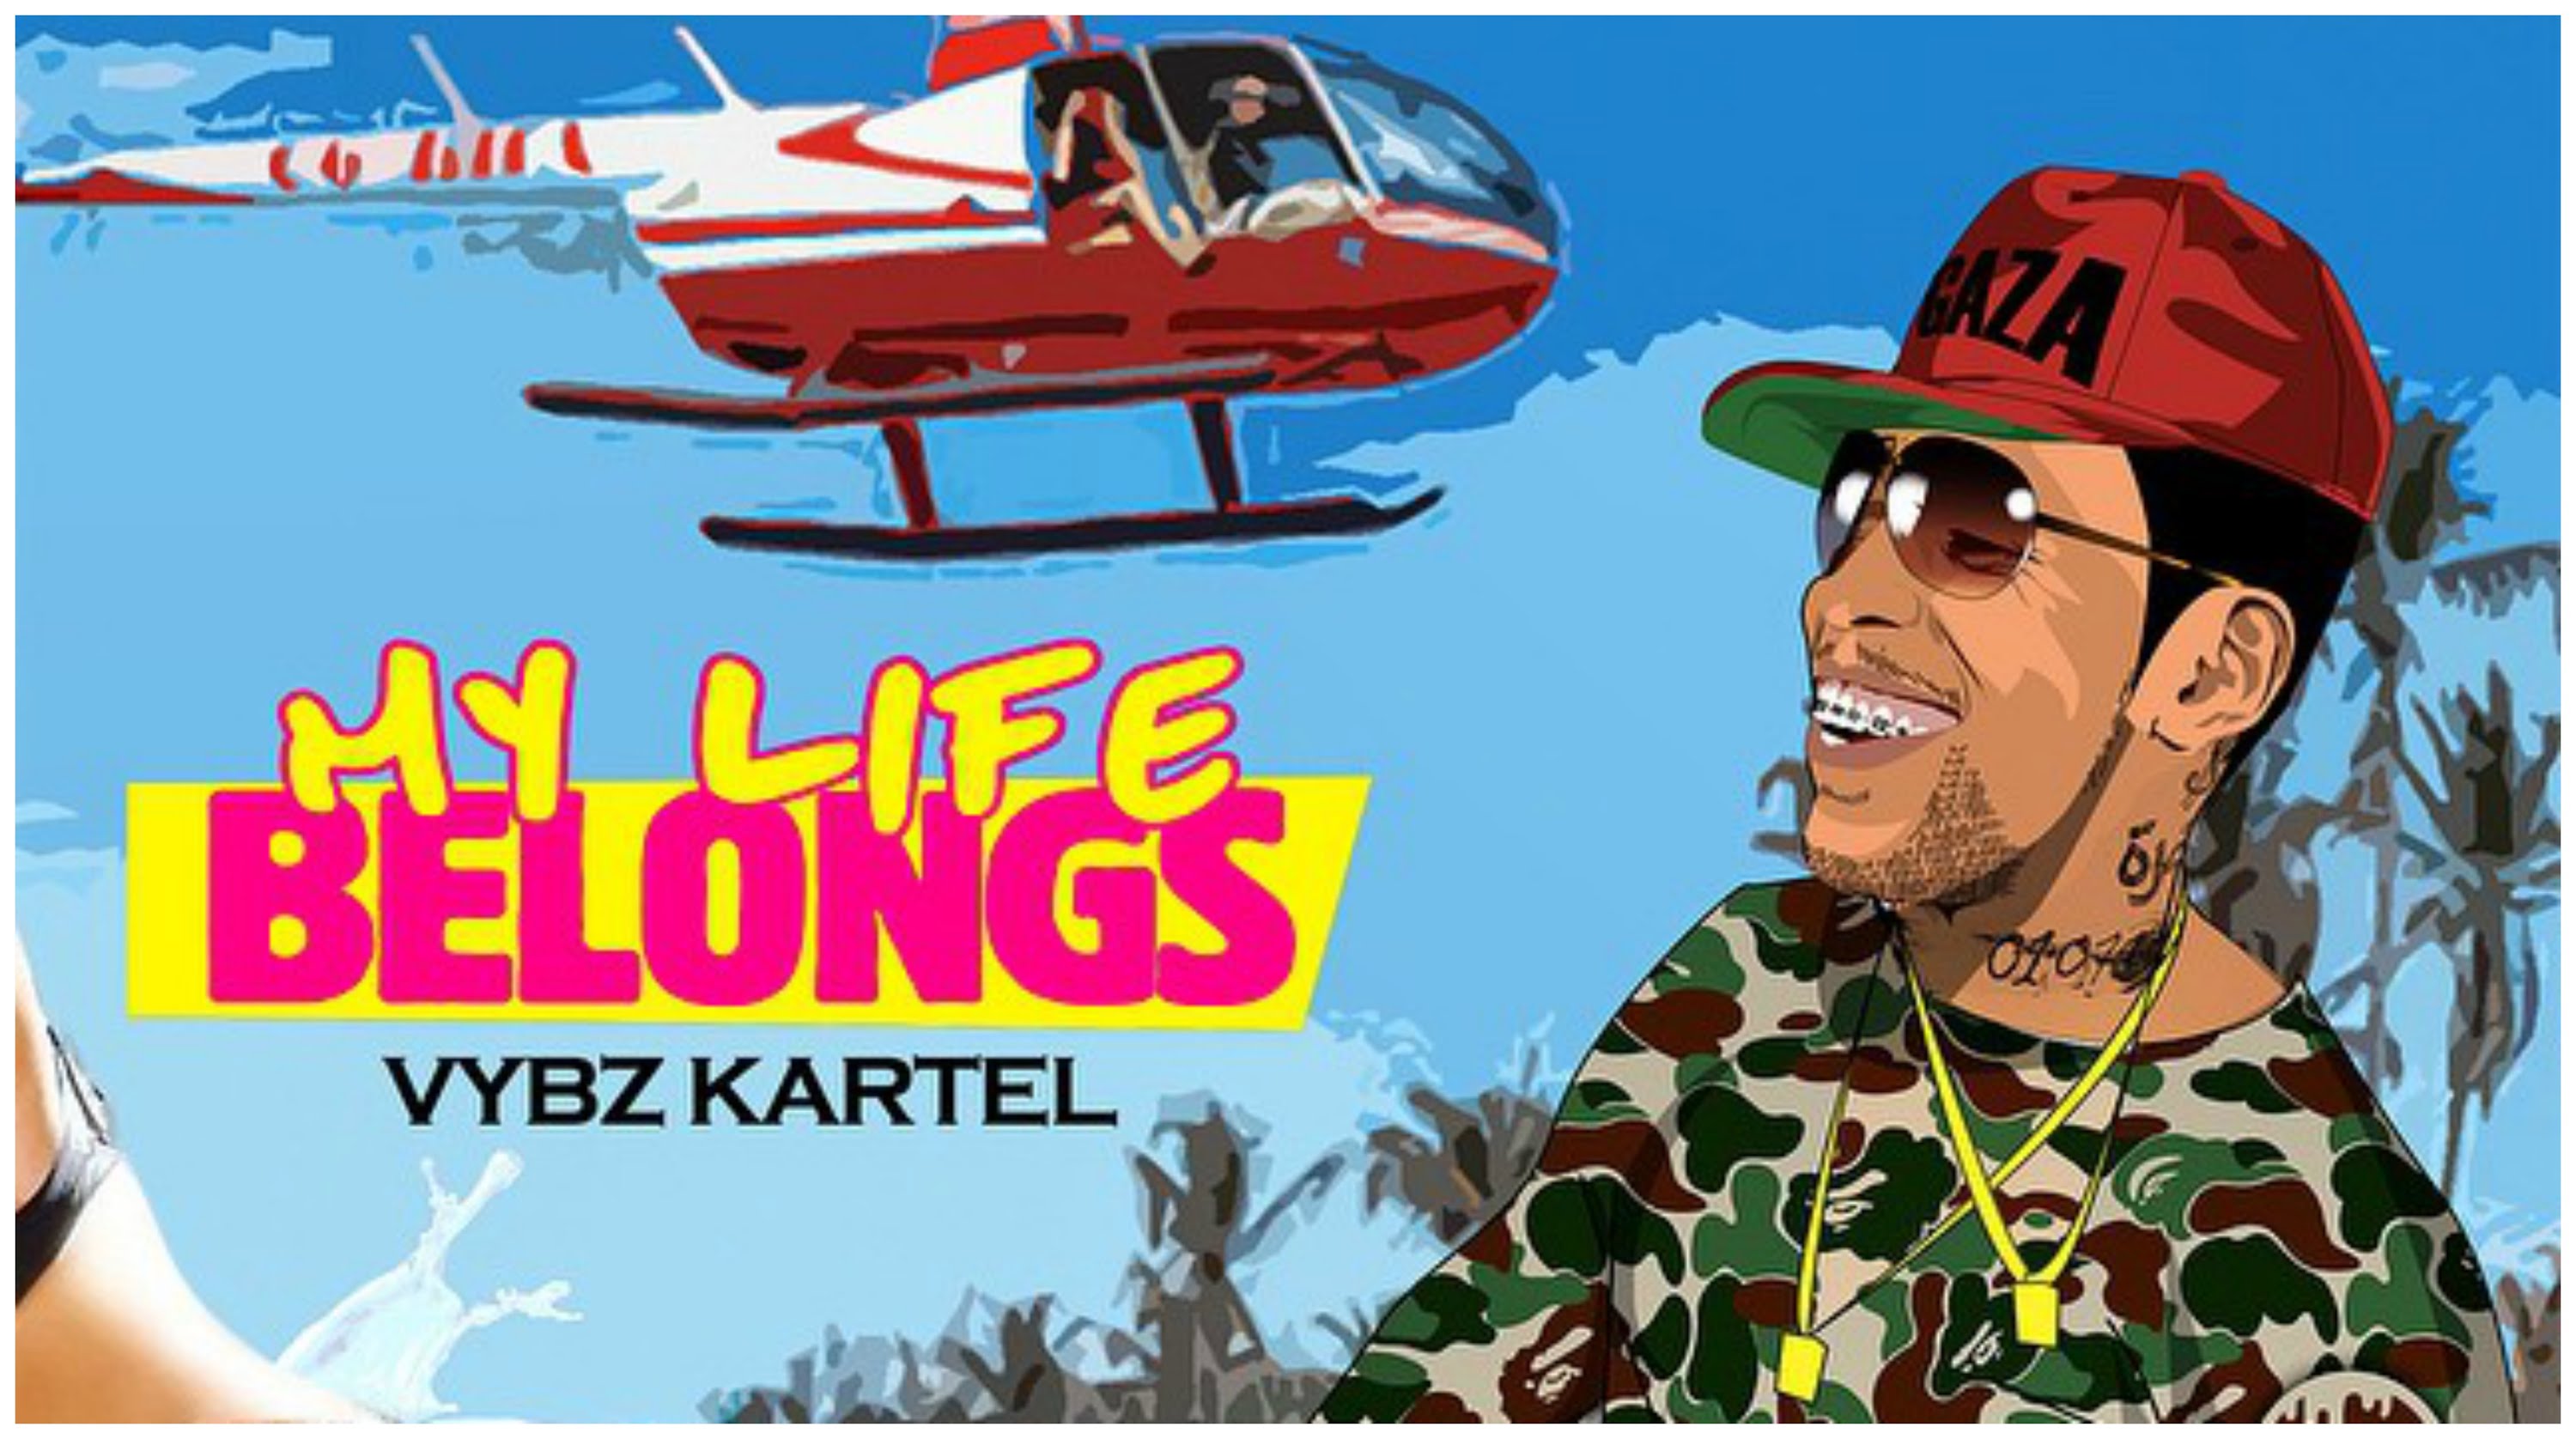 vybz kartel new song my life belongs tj records june 2015